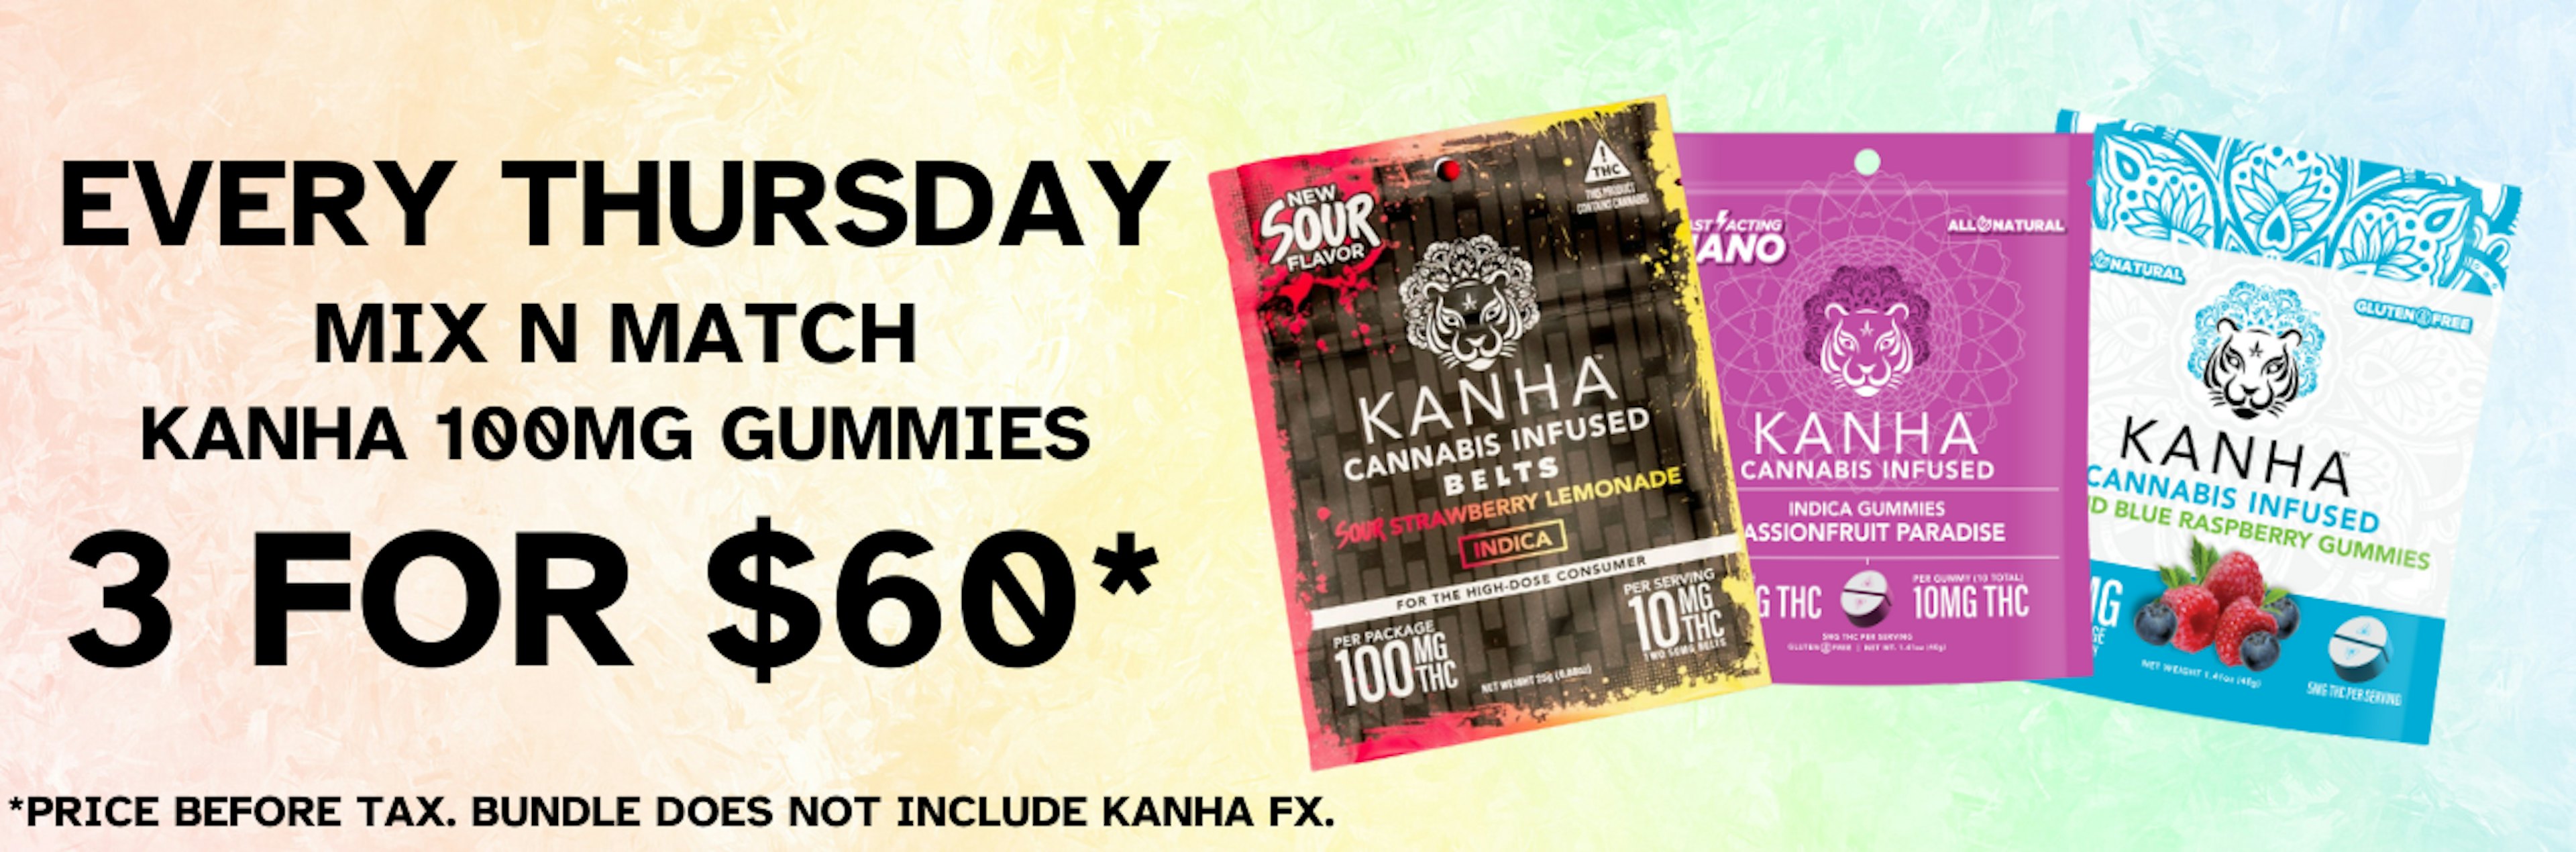 Kanha Thursday Deal